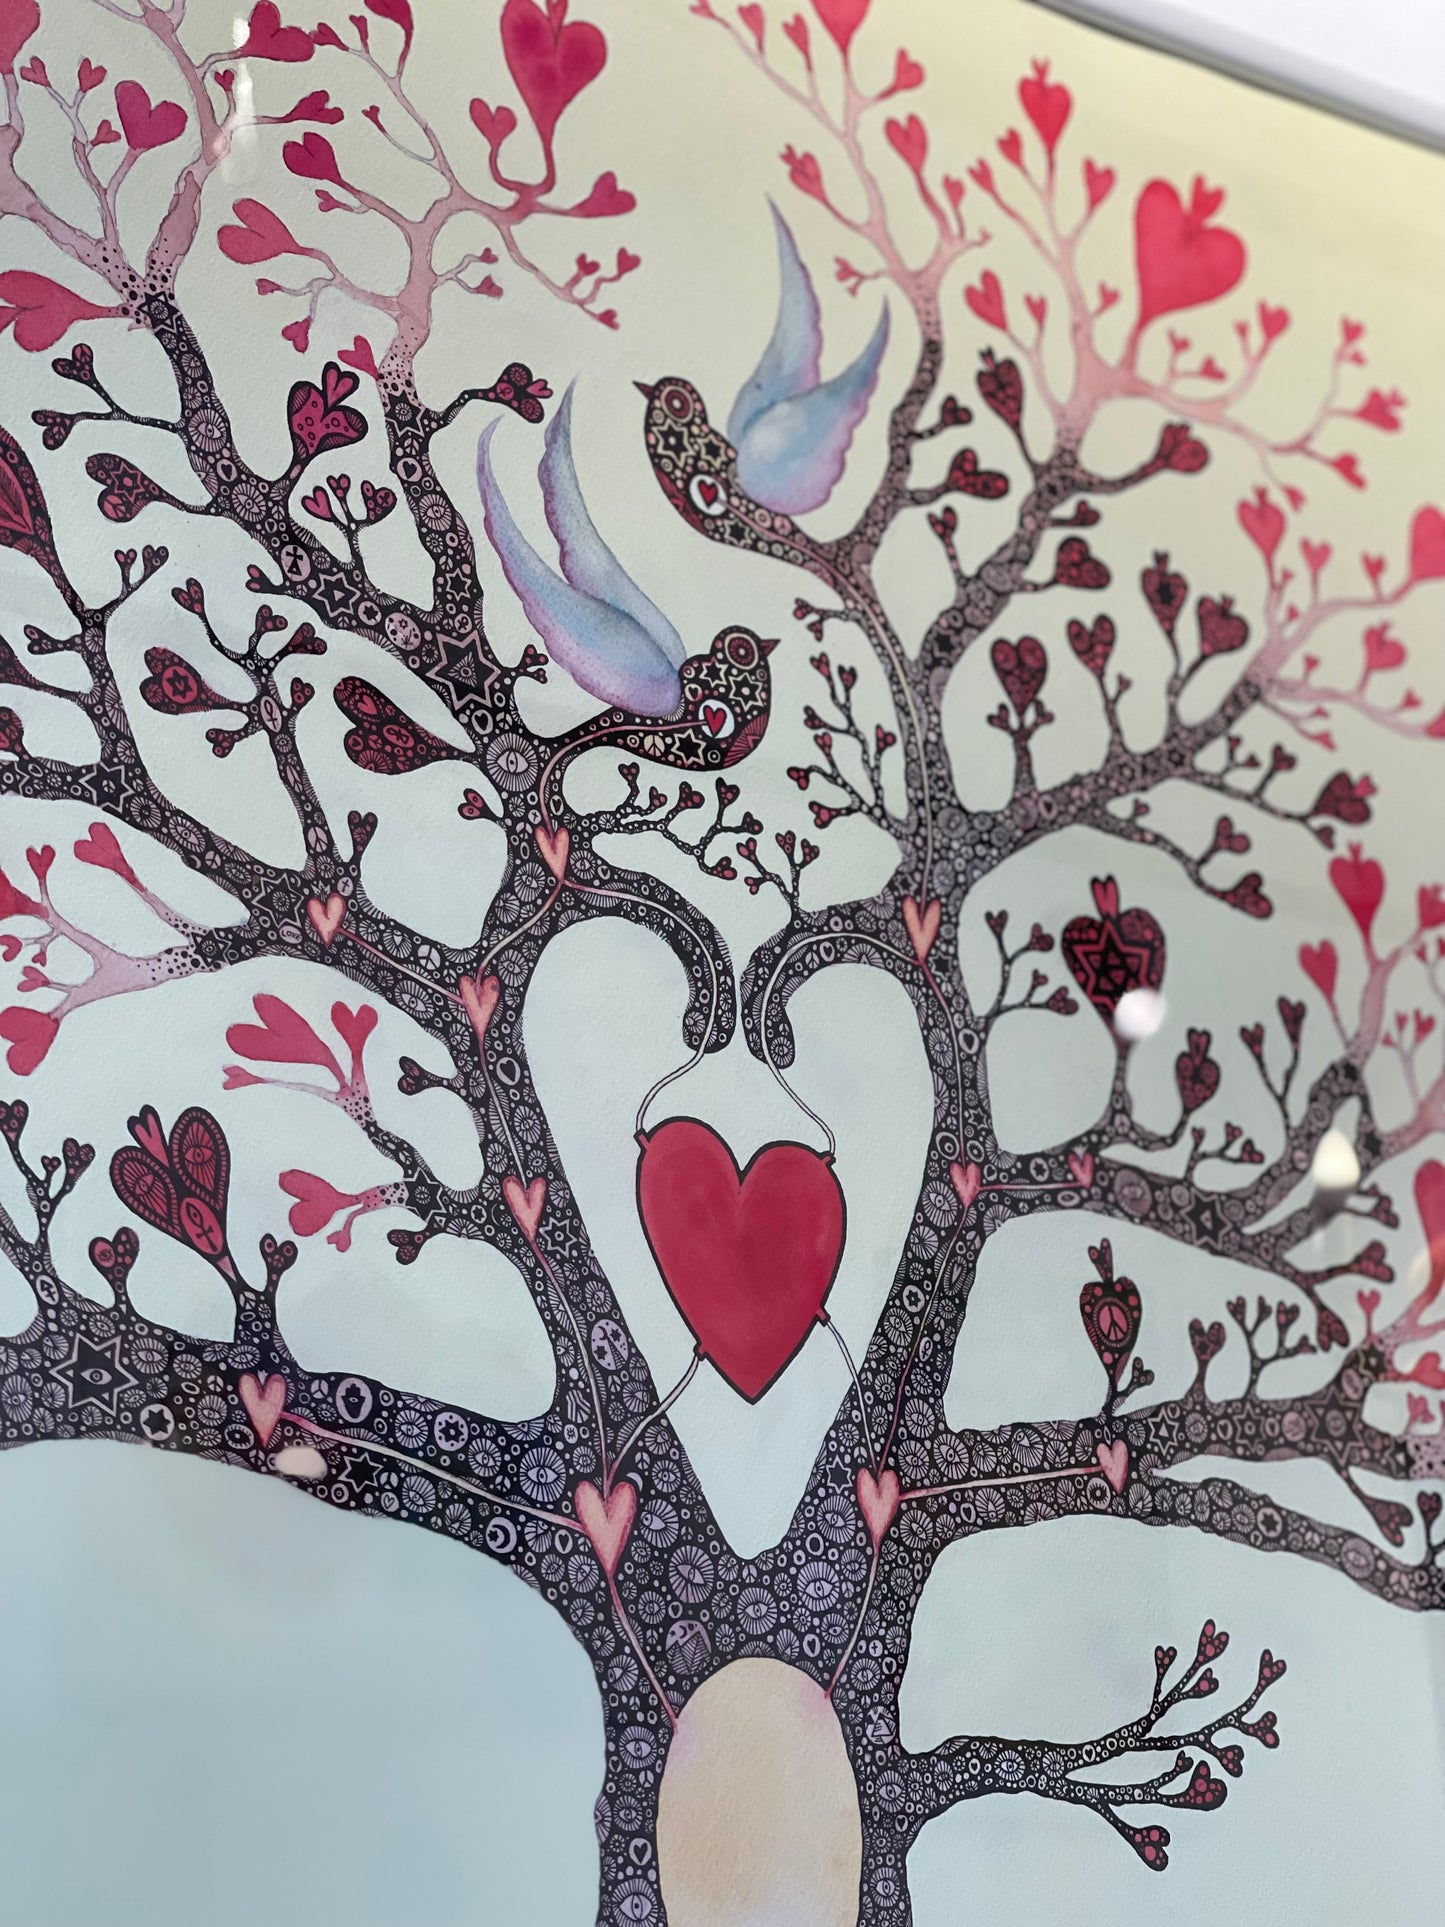 Tree of Love (Original by Michael Mott)